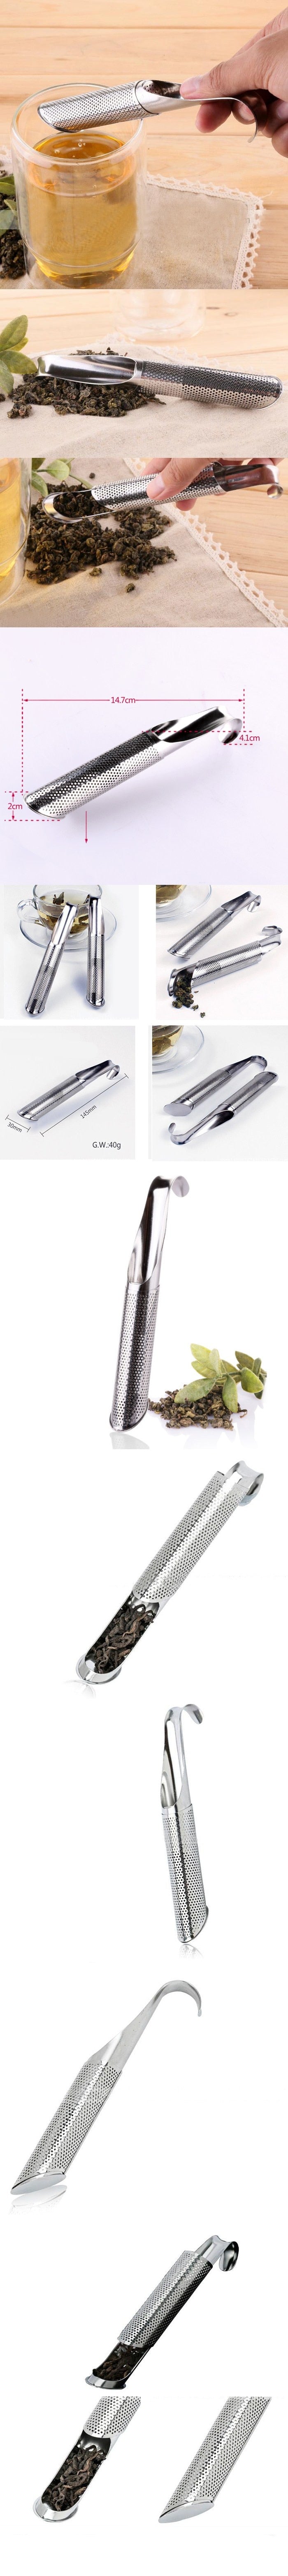 Tea Strainer Amazing Stainless Steel Tea Infuser Pipe Design Touch Feel Good Holder Tool Tea Spoon Infuser Filter